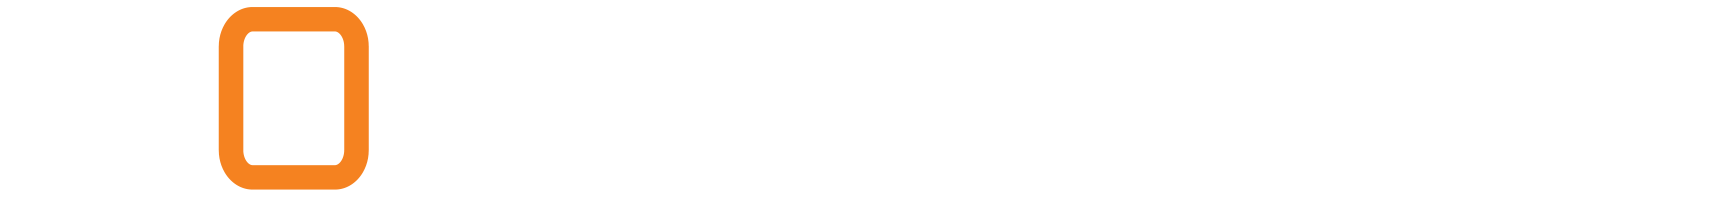 COLORBEAM logo Reverse